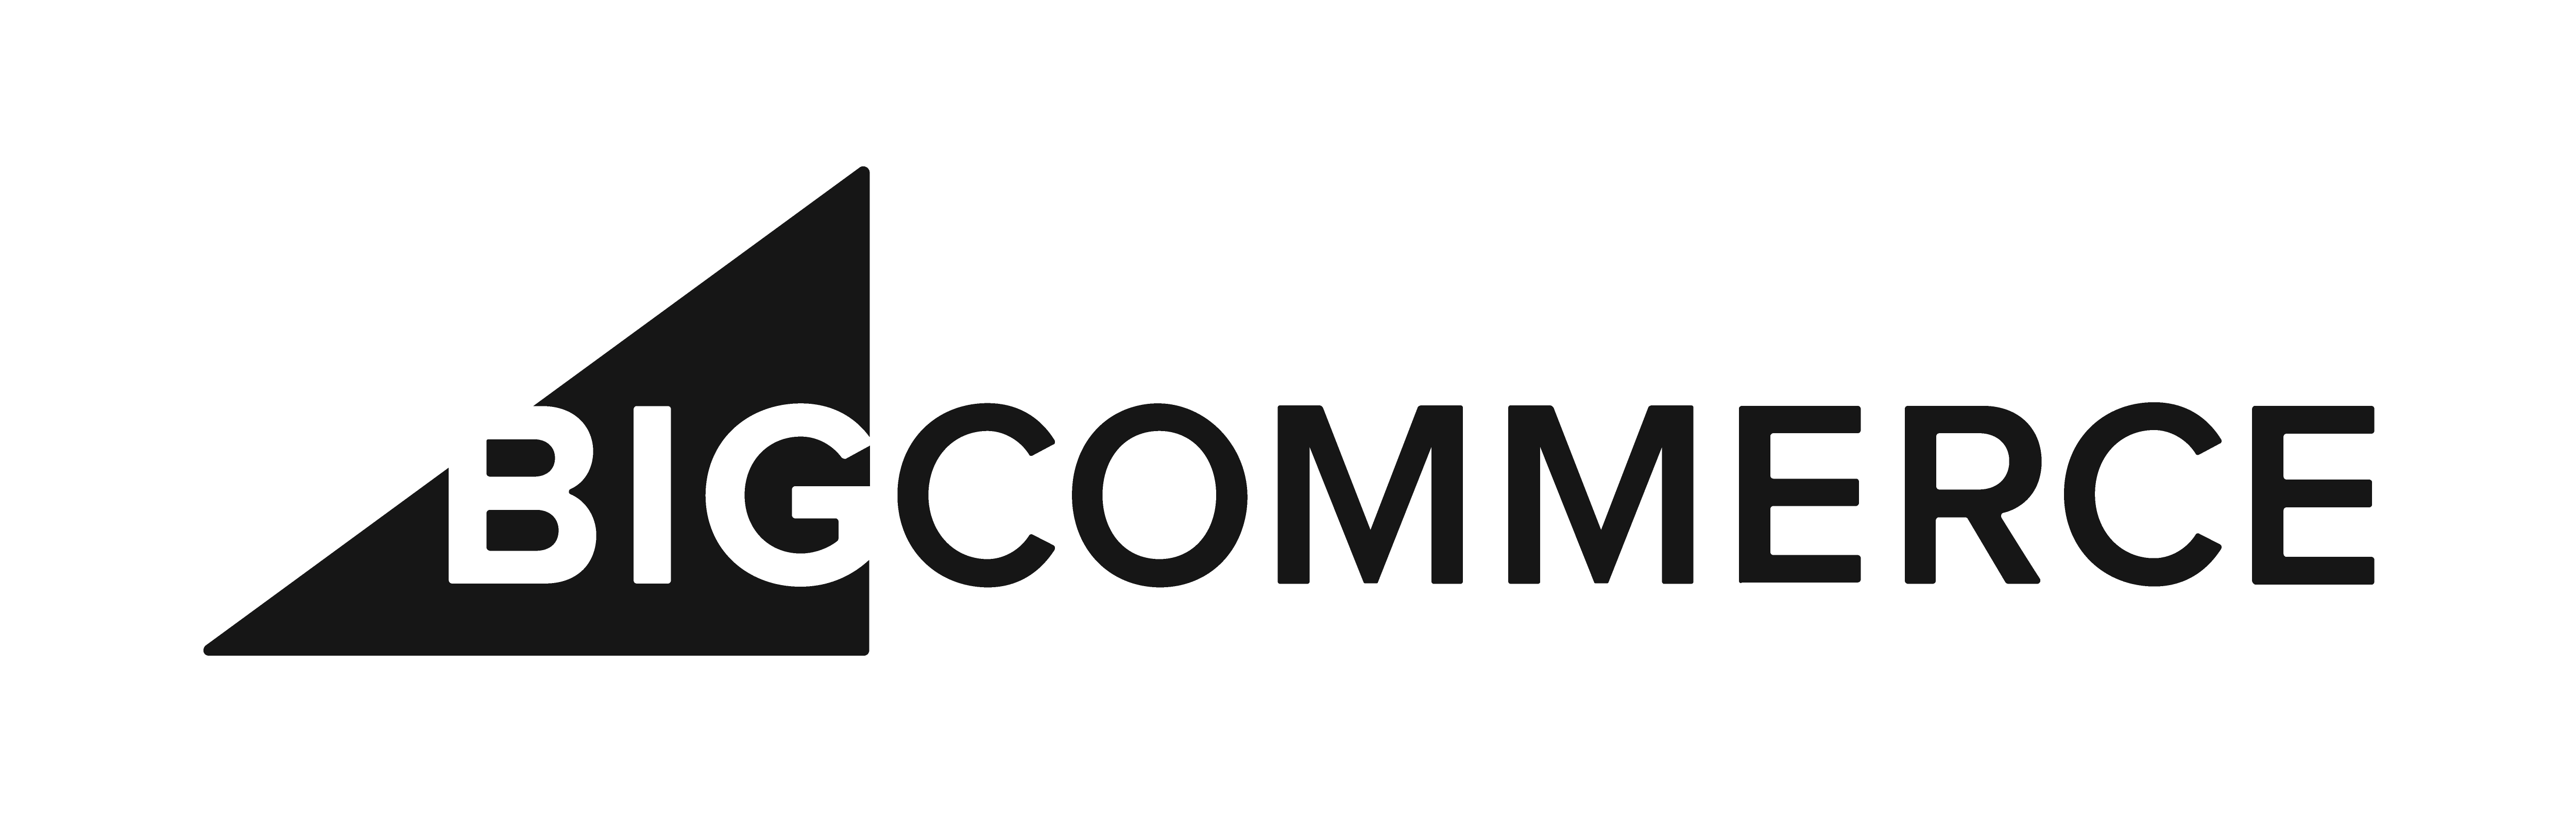 company-logos_BigCommerce